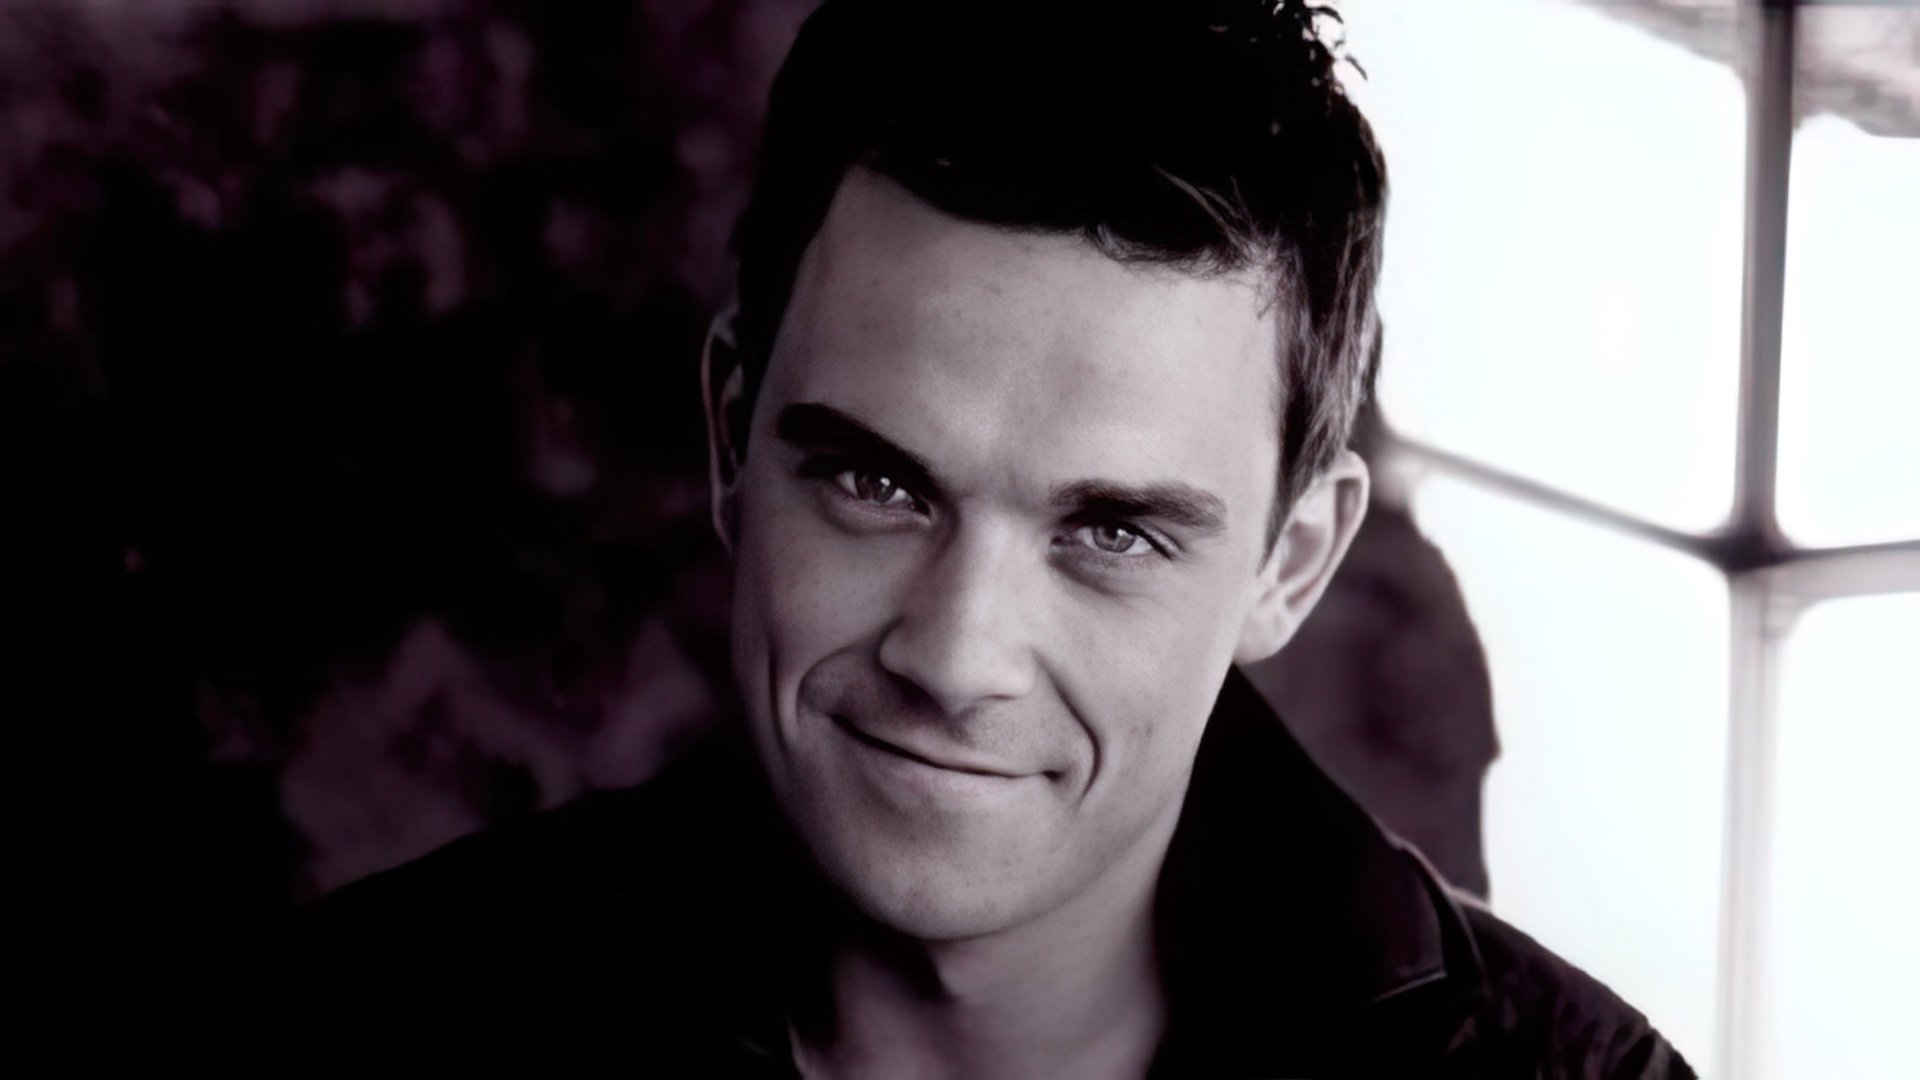 British pop singer Robbie Williams